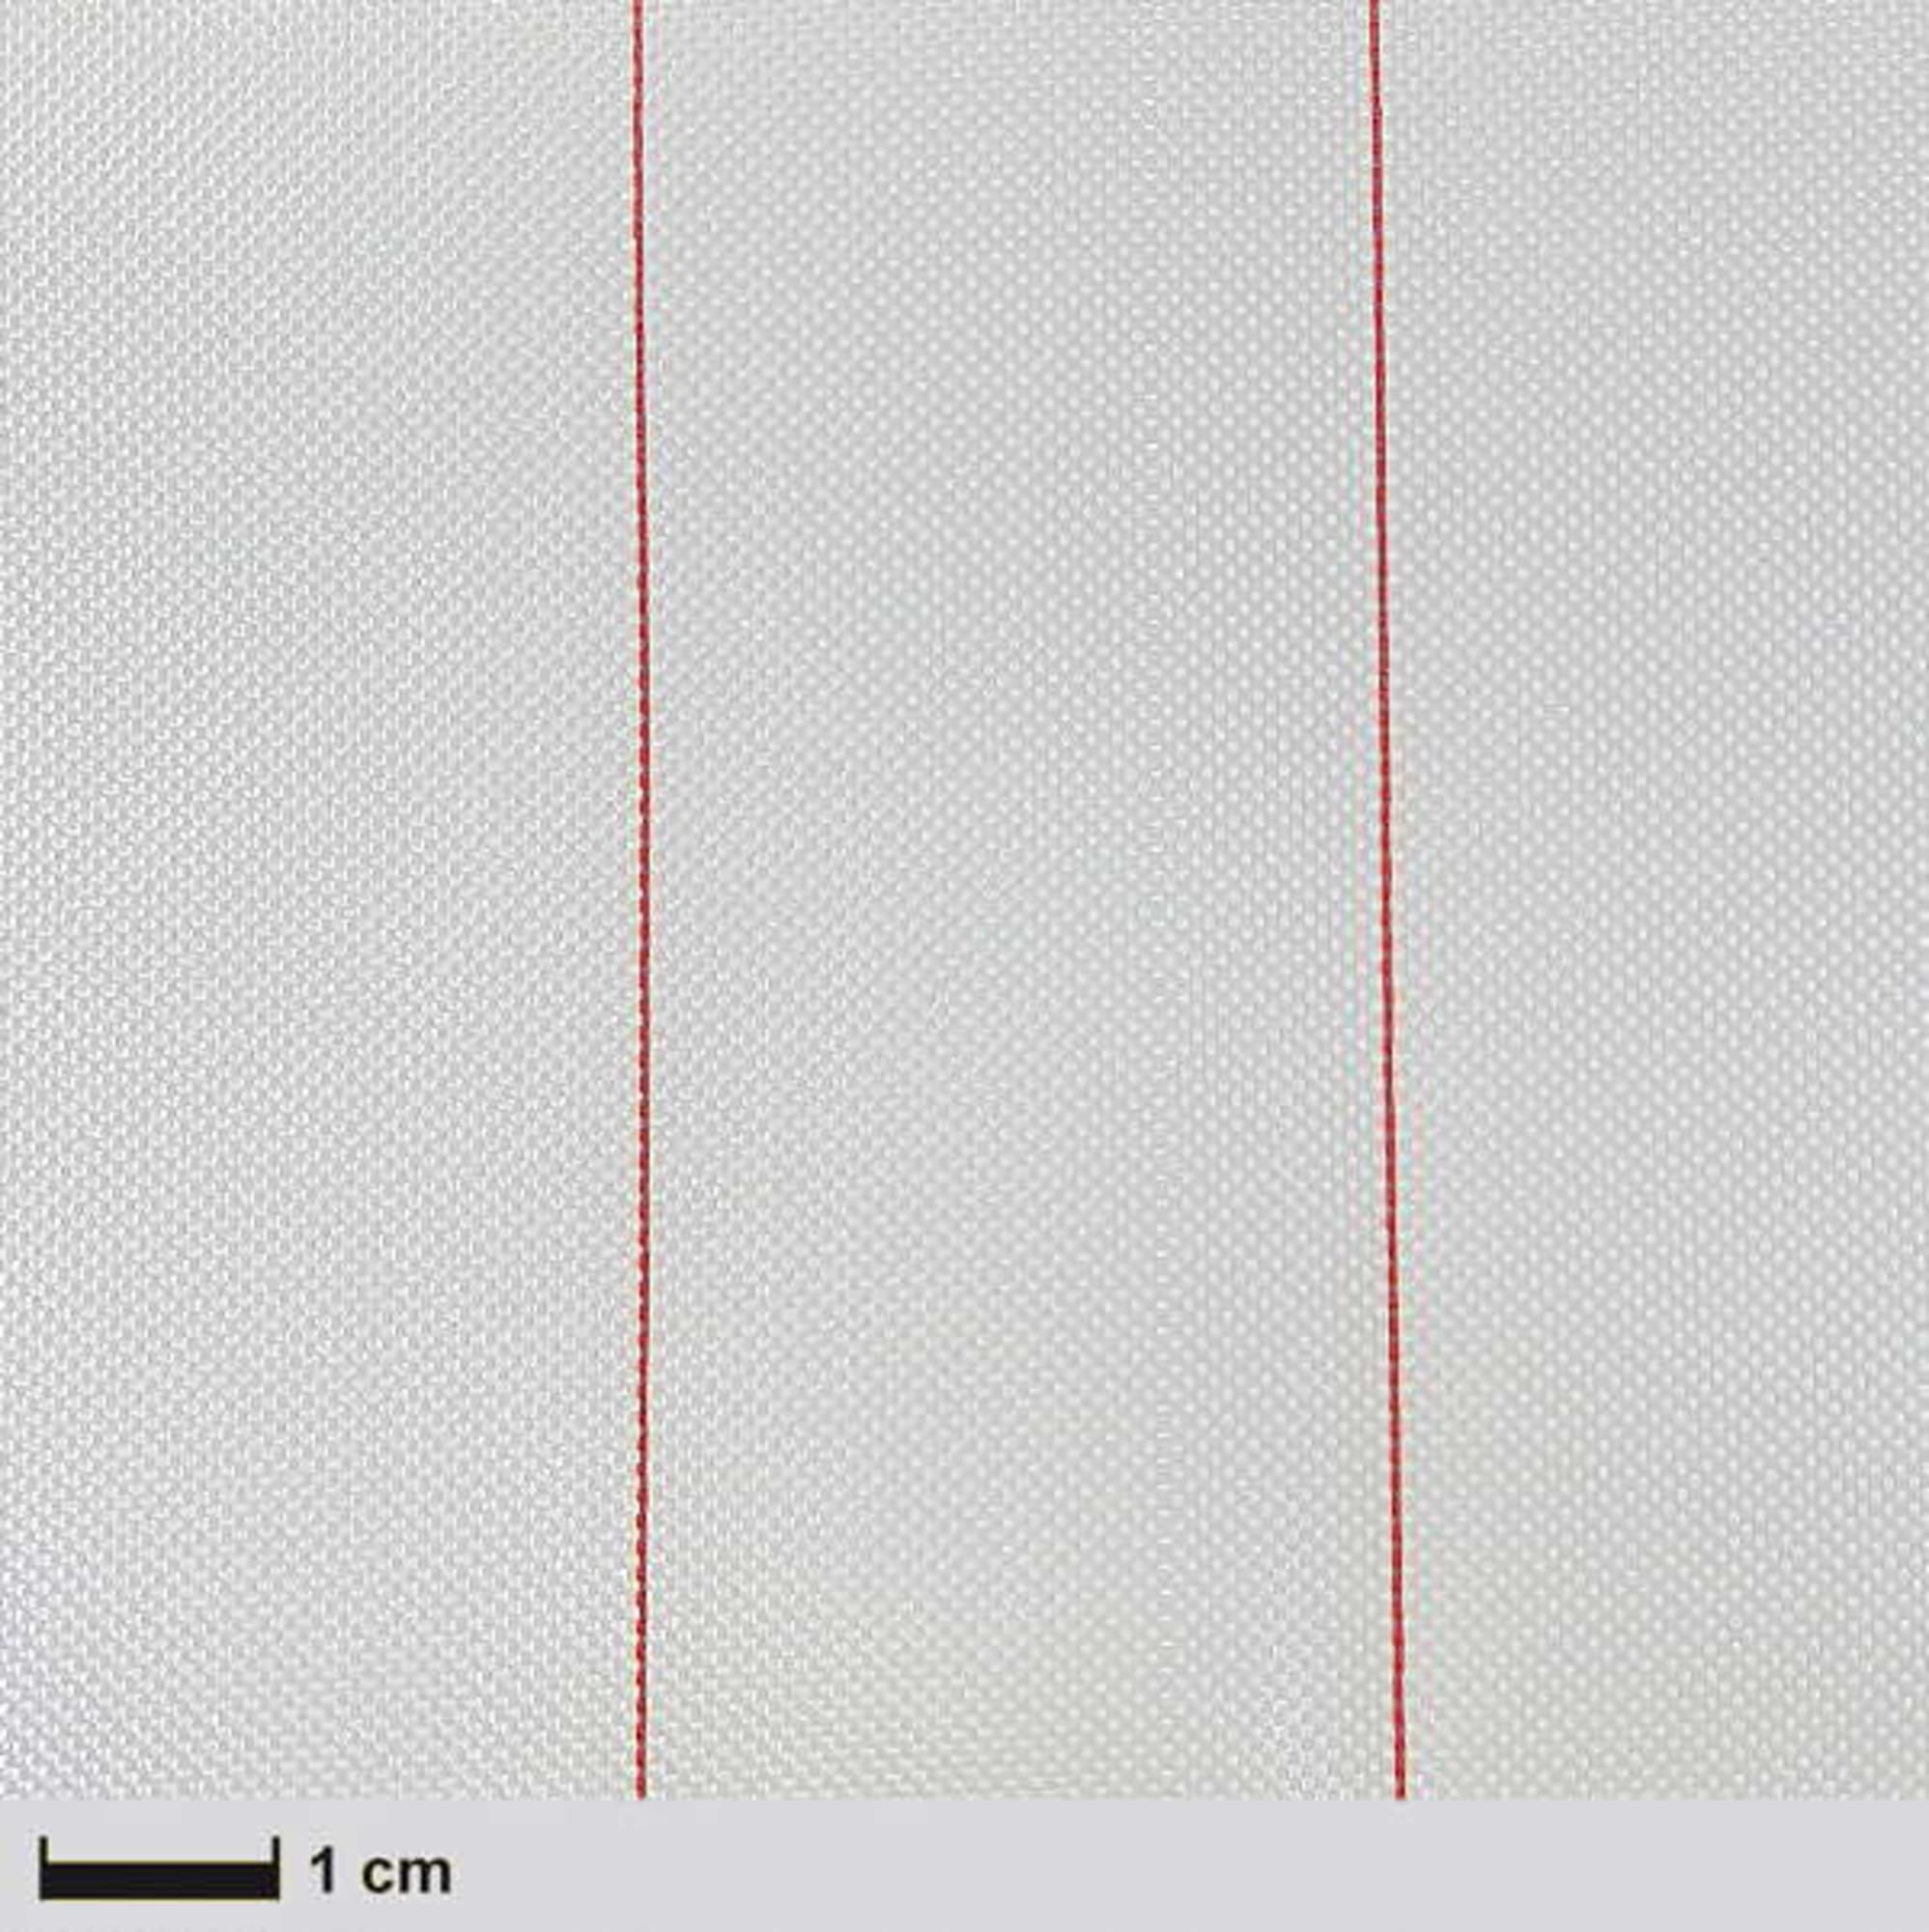 Peel ply 95 g/m² (plain weave) 50 cm